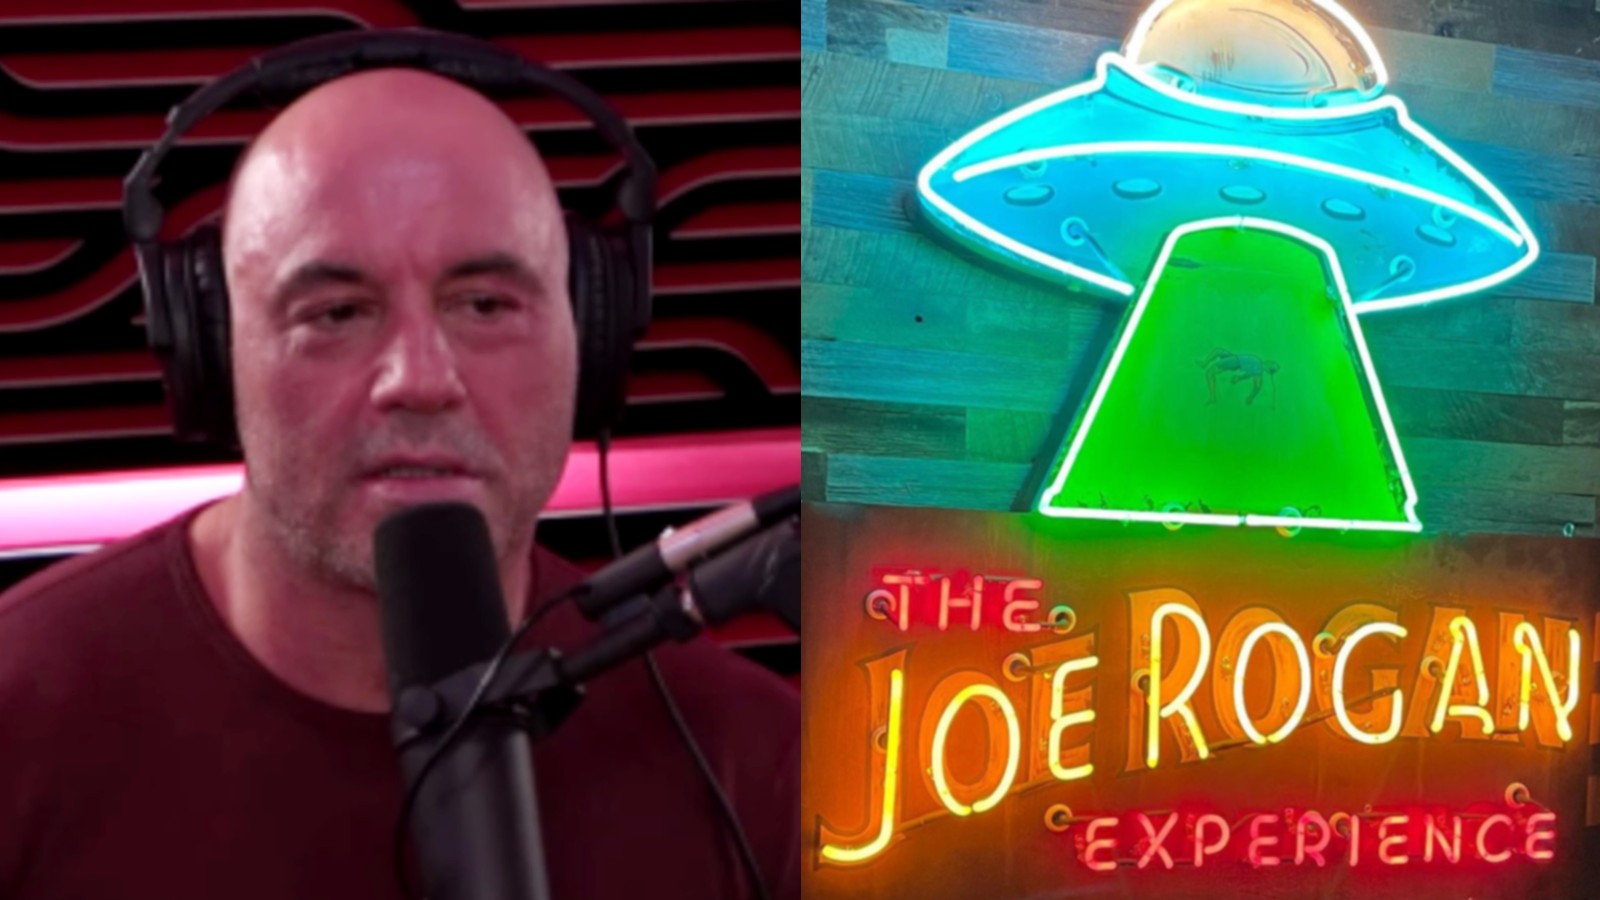 Joe Rogan's new Texas podcast studio move imminent after teasing details -  Dexerto